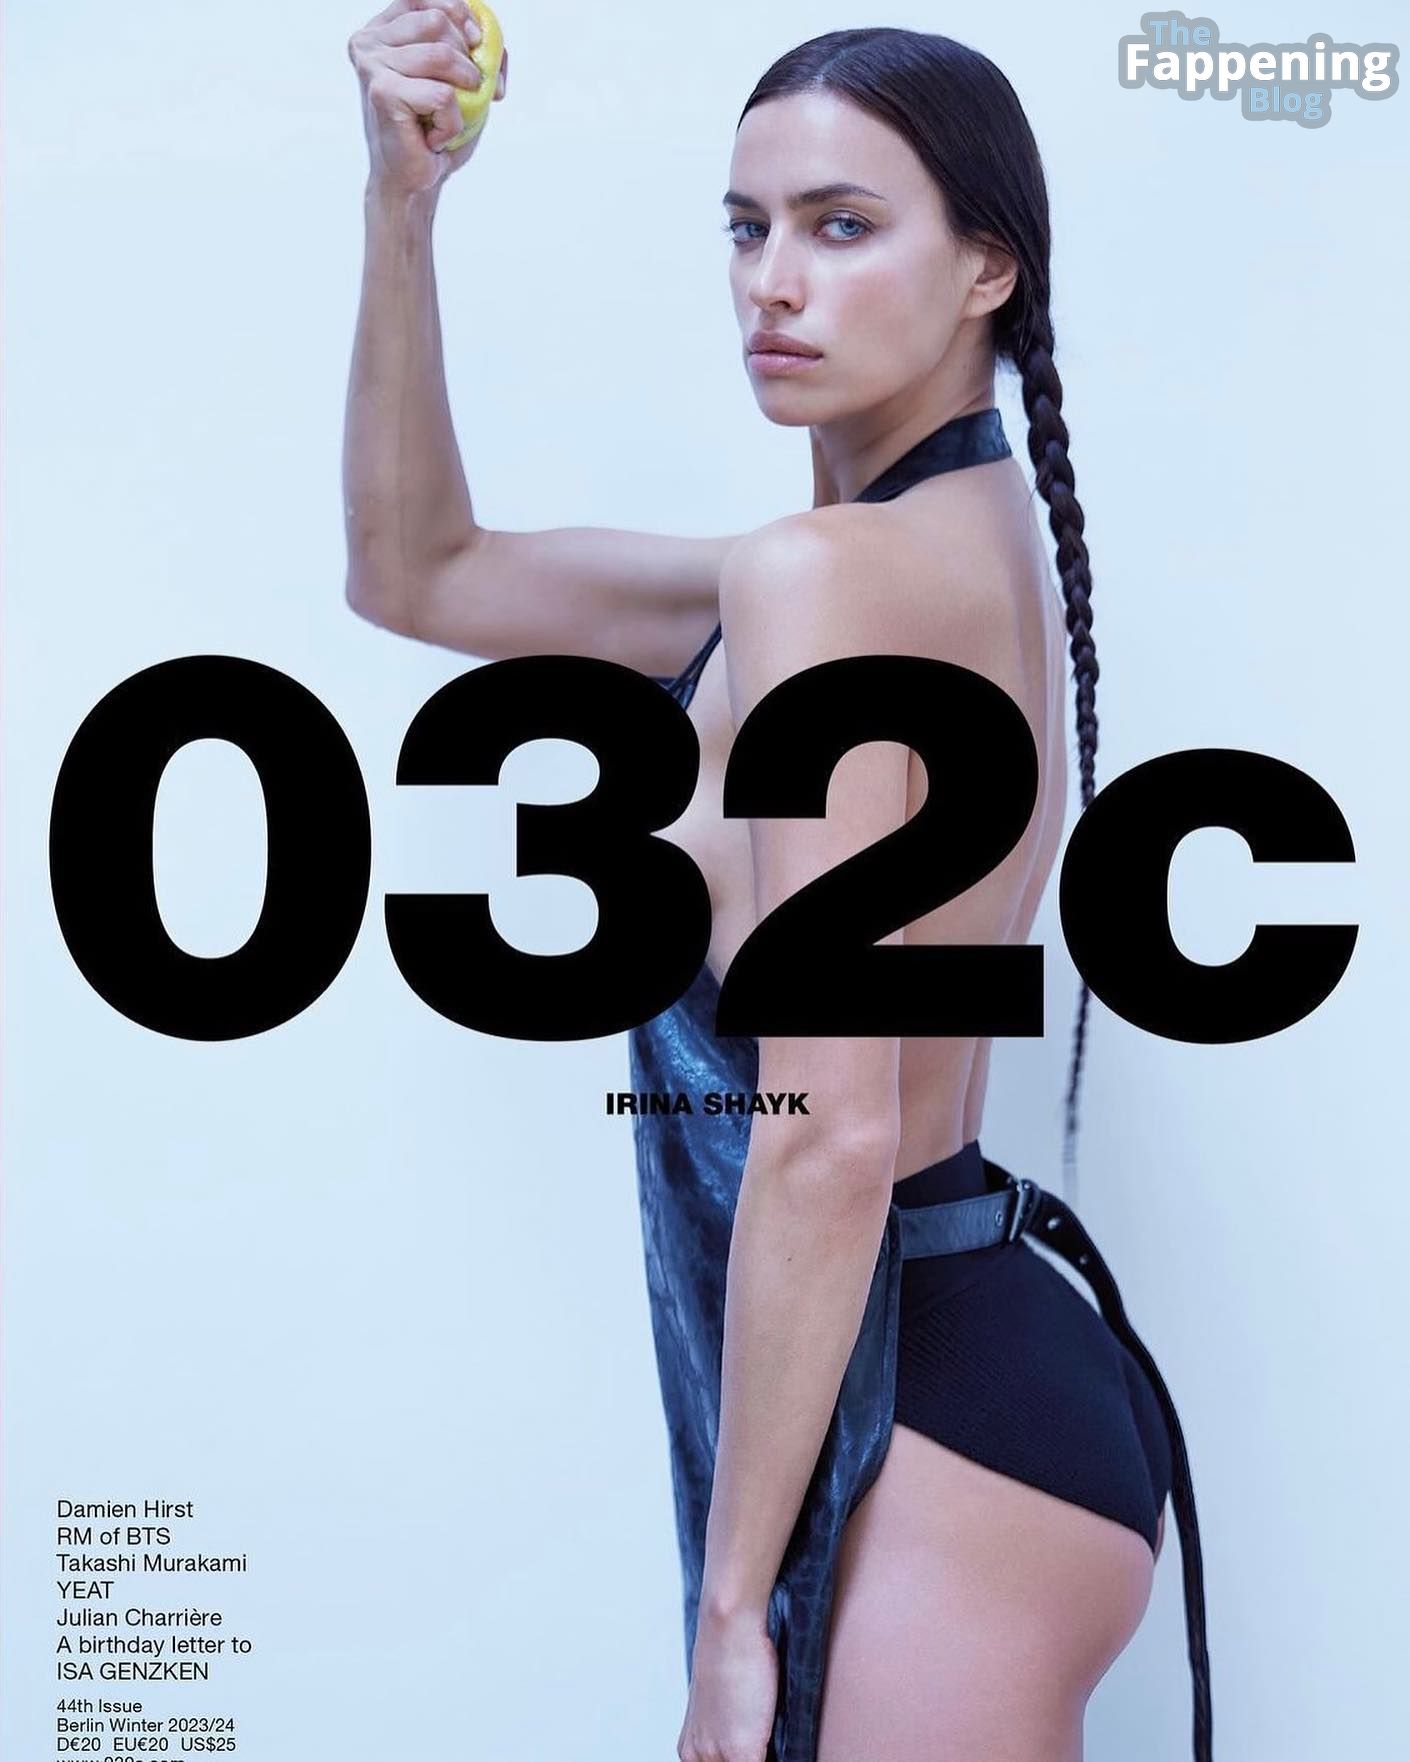 Irina Shayk Leaves Little to the Imagination in the New 032c Magazine (10 Photos)